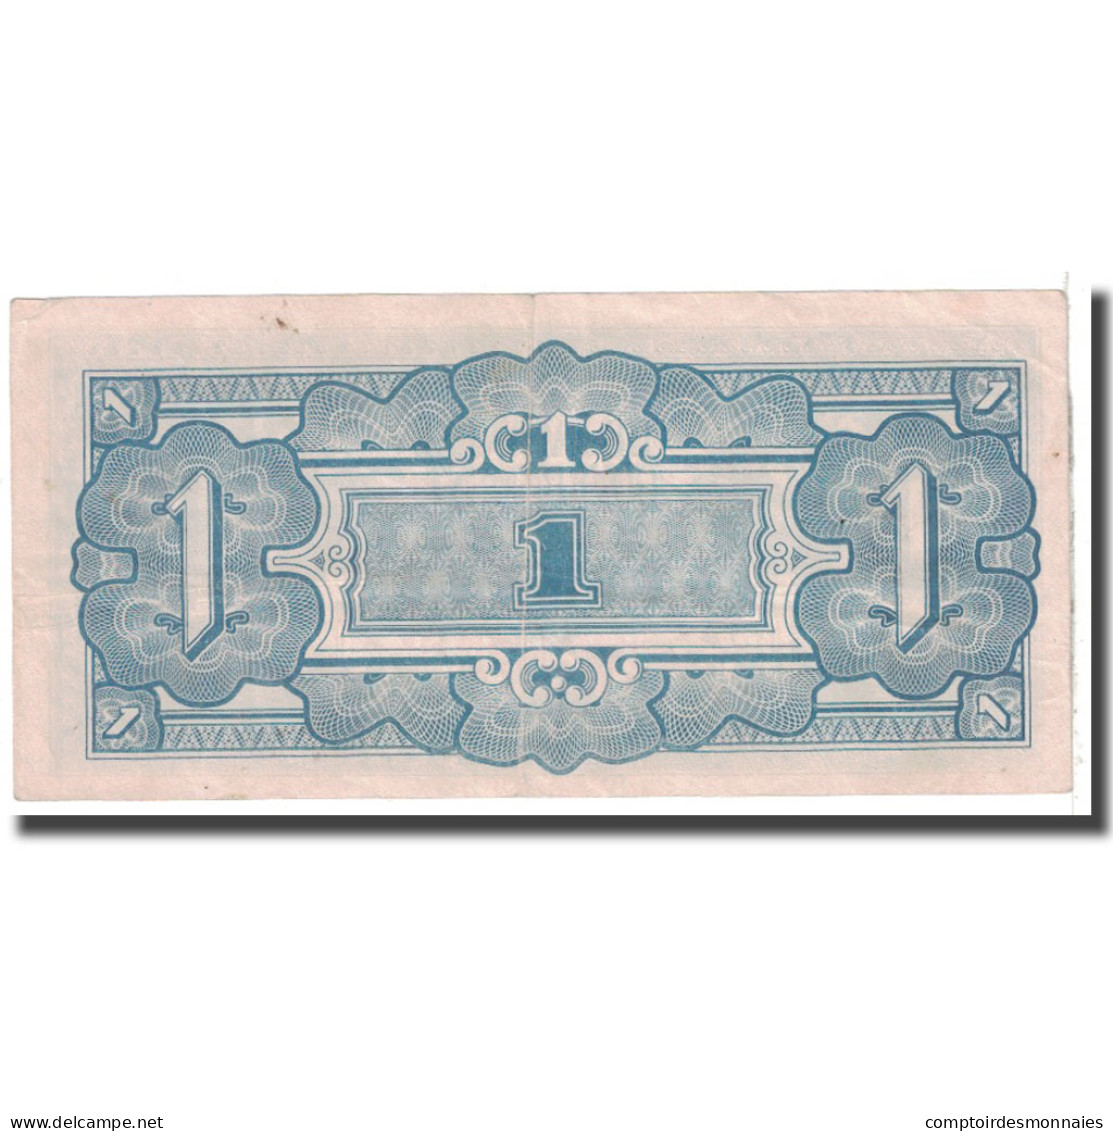 Billet, MALAYA, 1 Dollar, 1942, KM:M5c, TTB - Maleisië